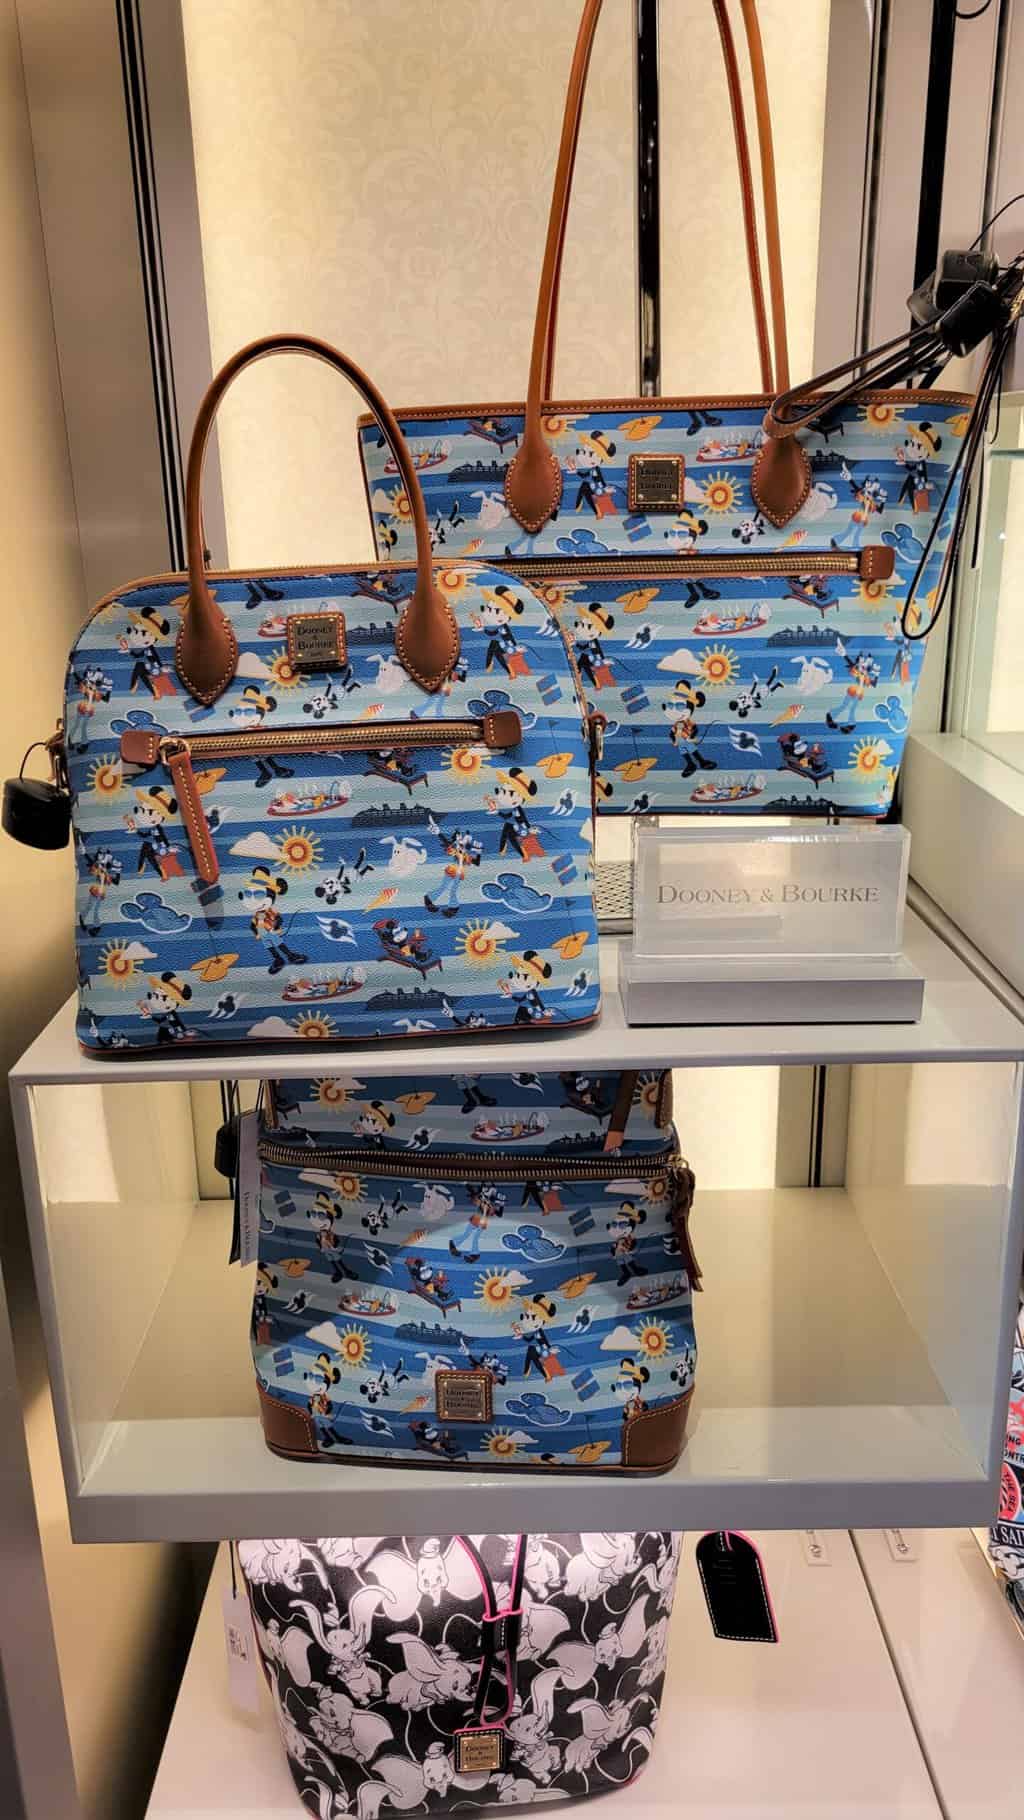 Latest Disney Dooney & Bourke Bags on Disney Wish - Disney Dooney and ...